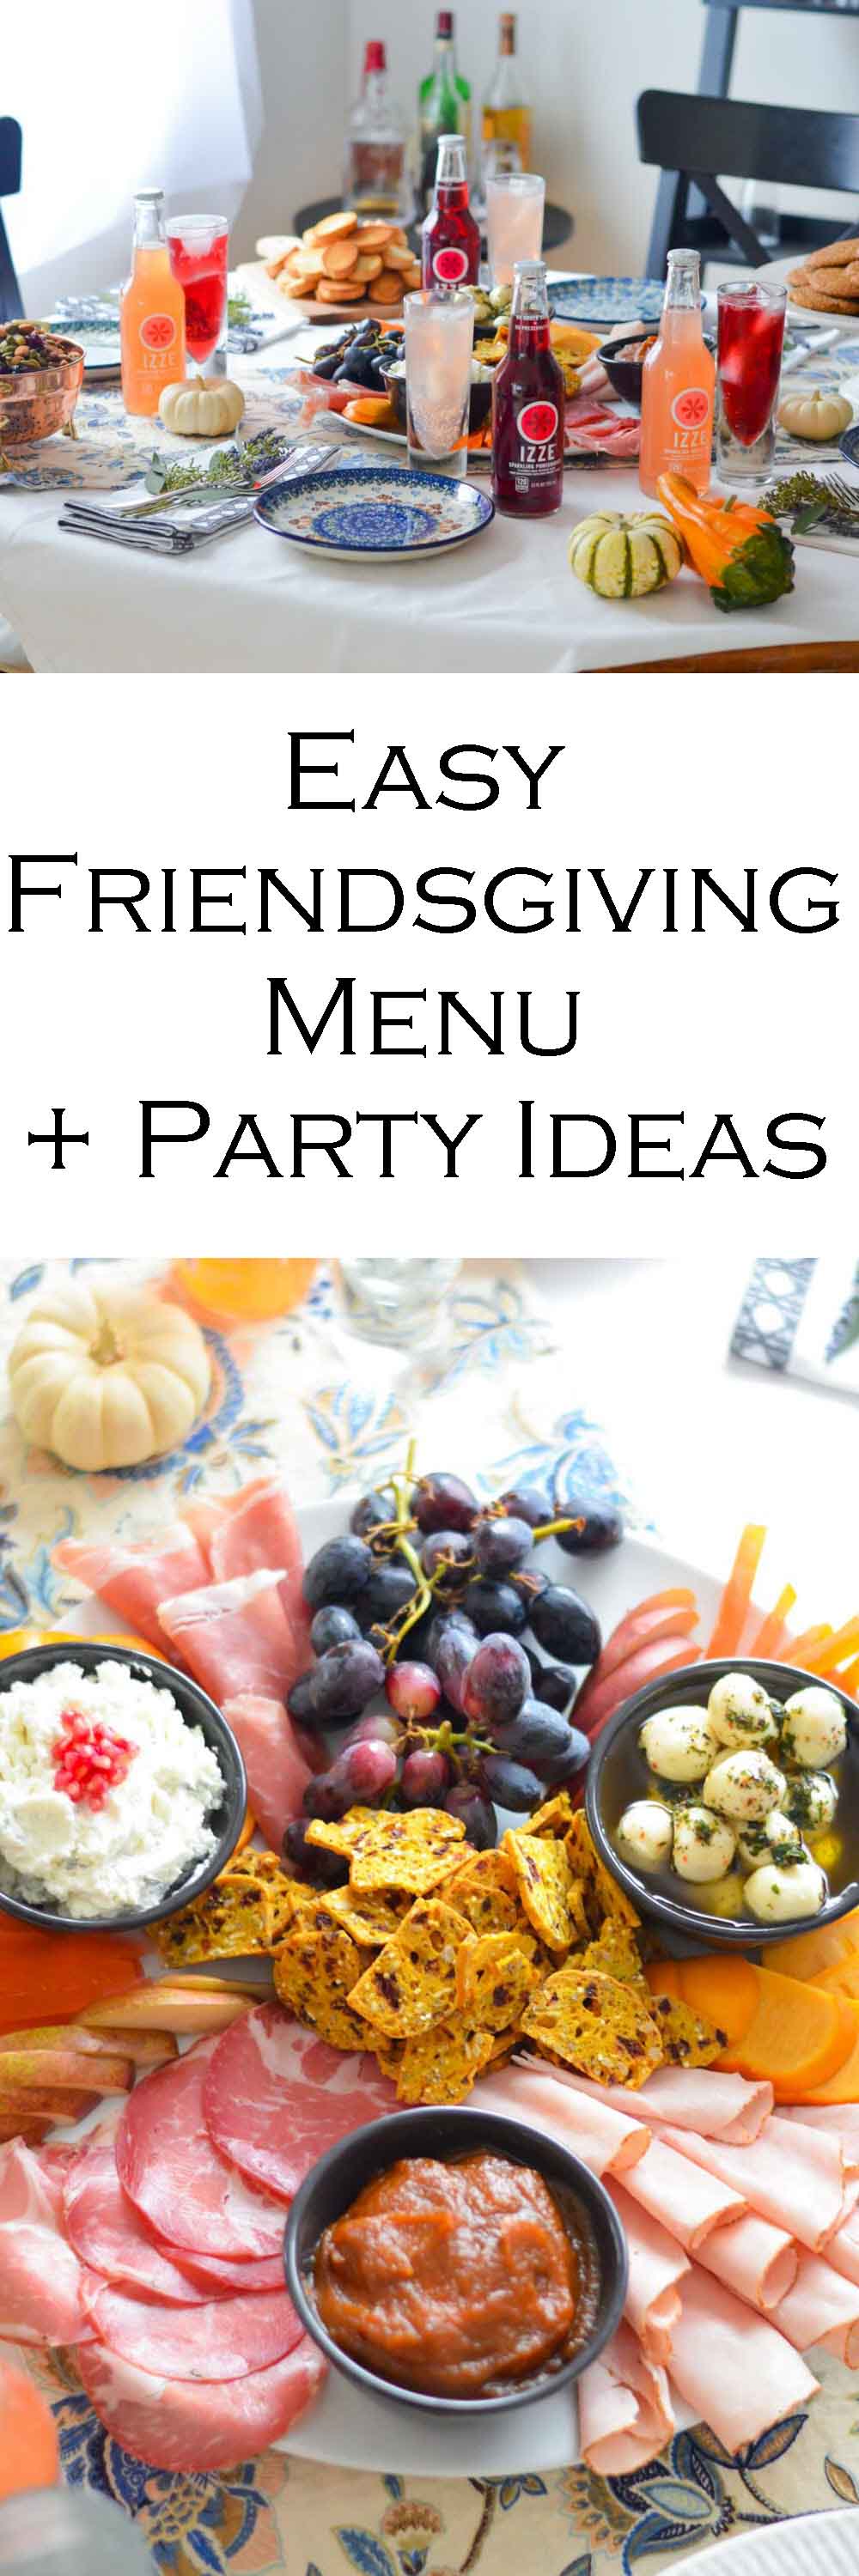 Easy Friendsgiving Ideas + Party Menu #friendsgiving #charctuerie #entertaining #hostess #meatplatter #cheeseplatter #hosting #foodideas #foodbloggers